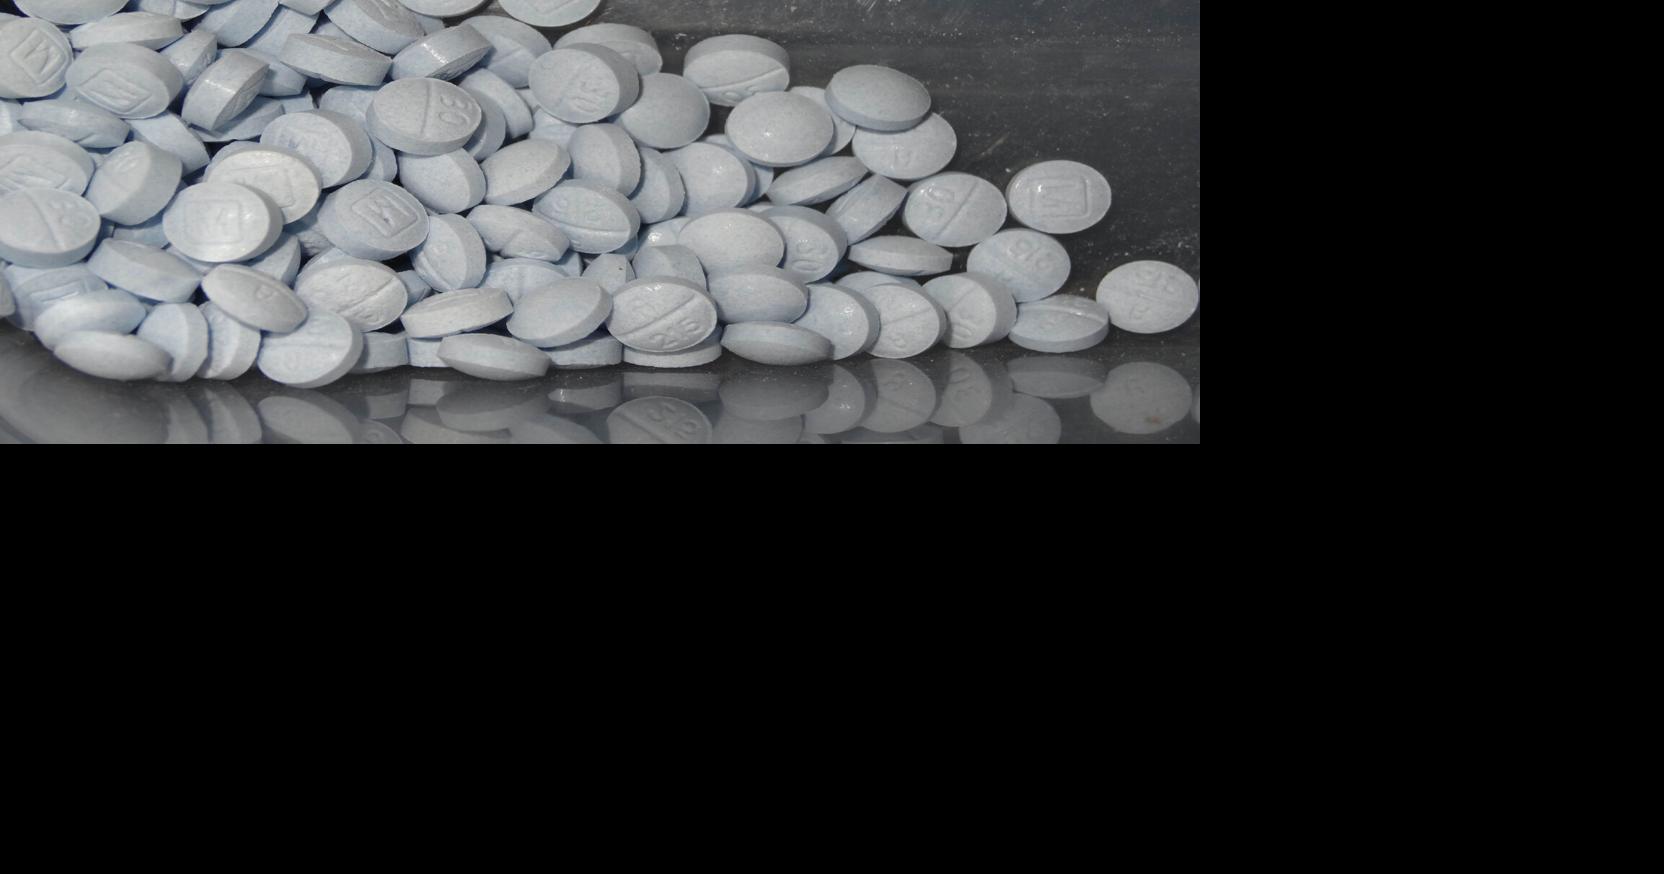 Delaware overdose deaths spike in 2021